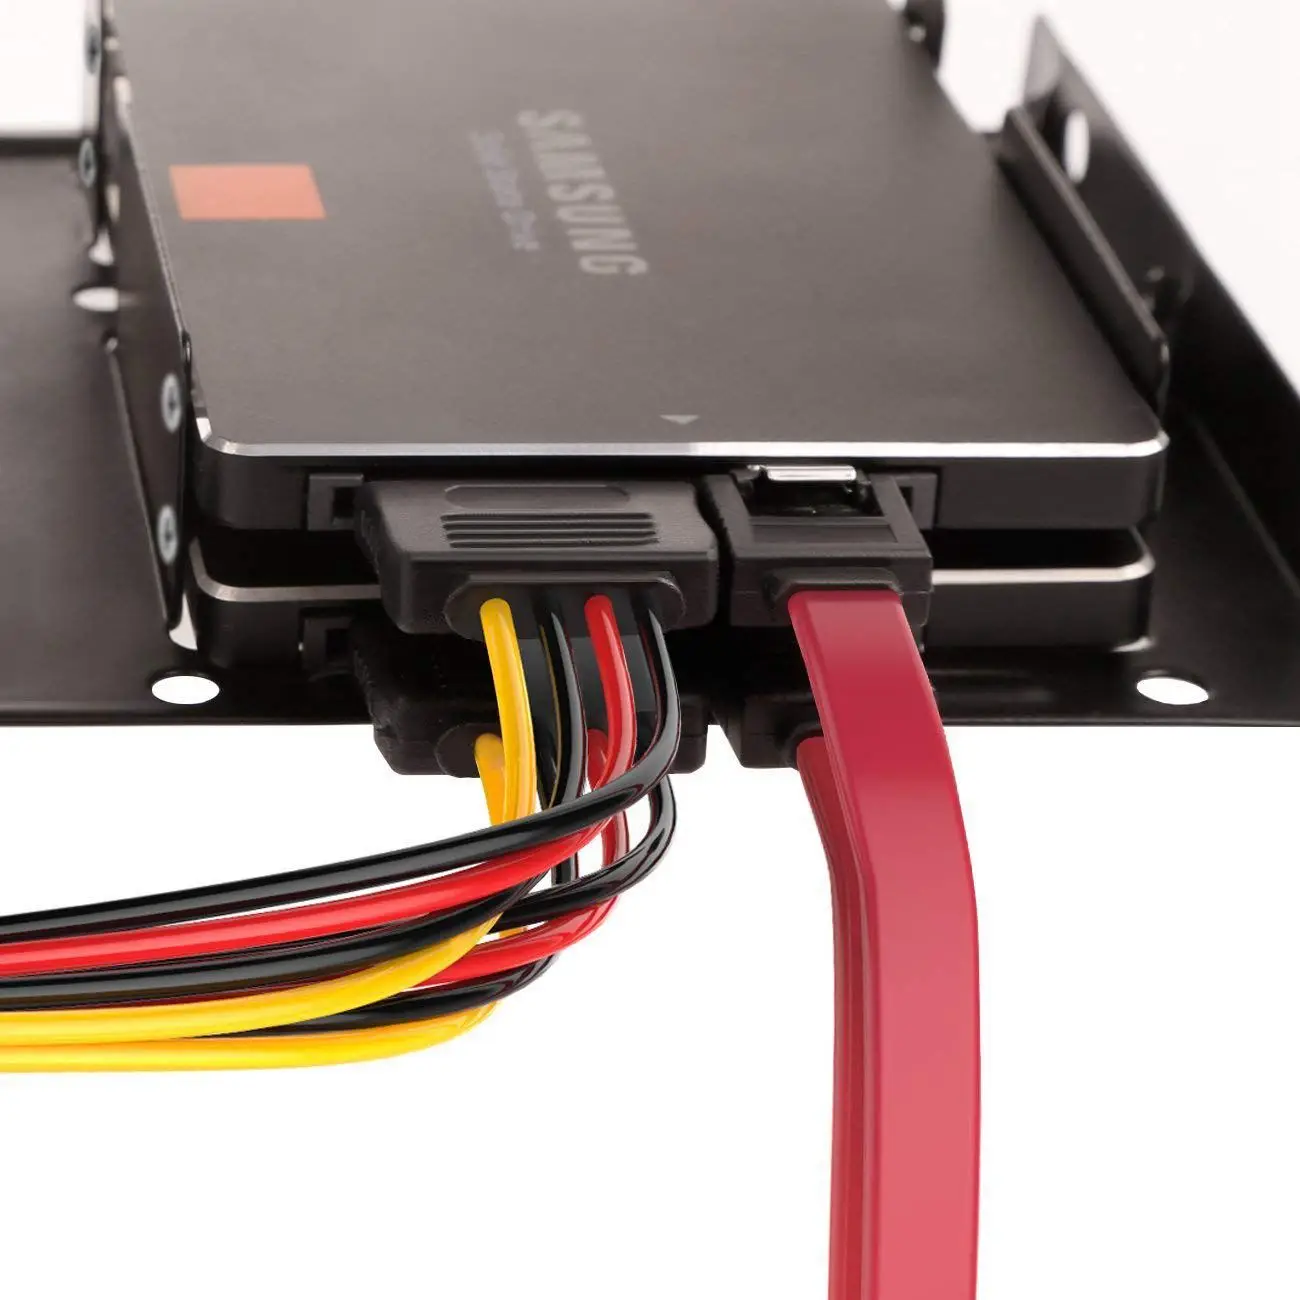 2X2,5 дюйма SSD до 3,5 дюйма внутренний монтажный комплект для жесткого диска(SATA кабели для передачи данных и кабели питания в комплекте